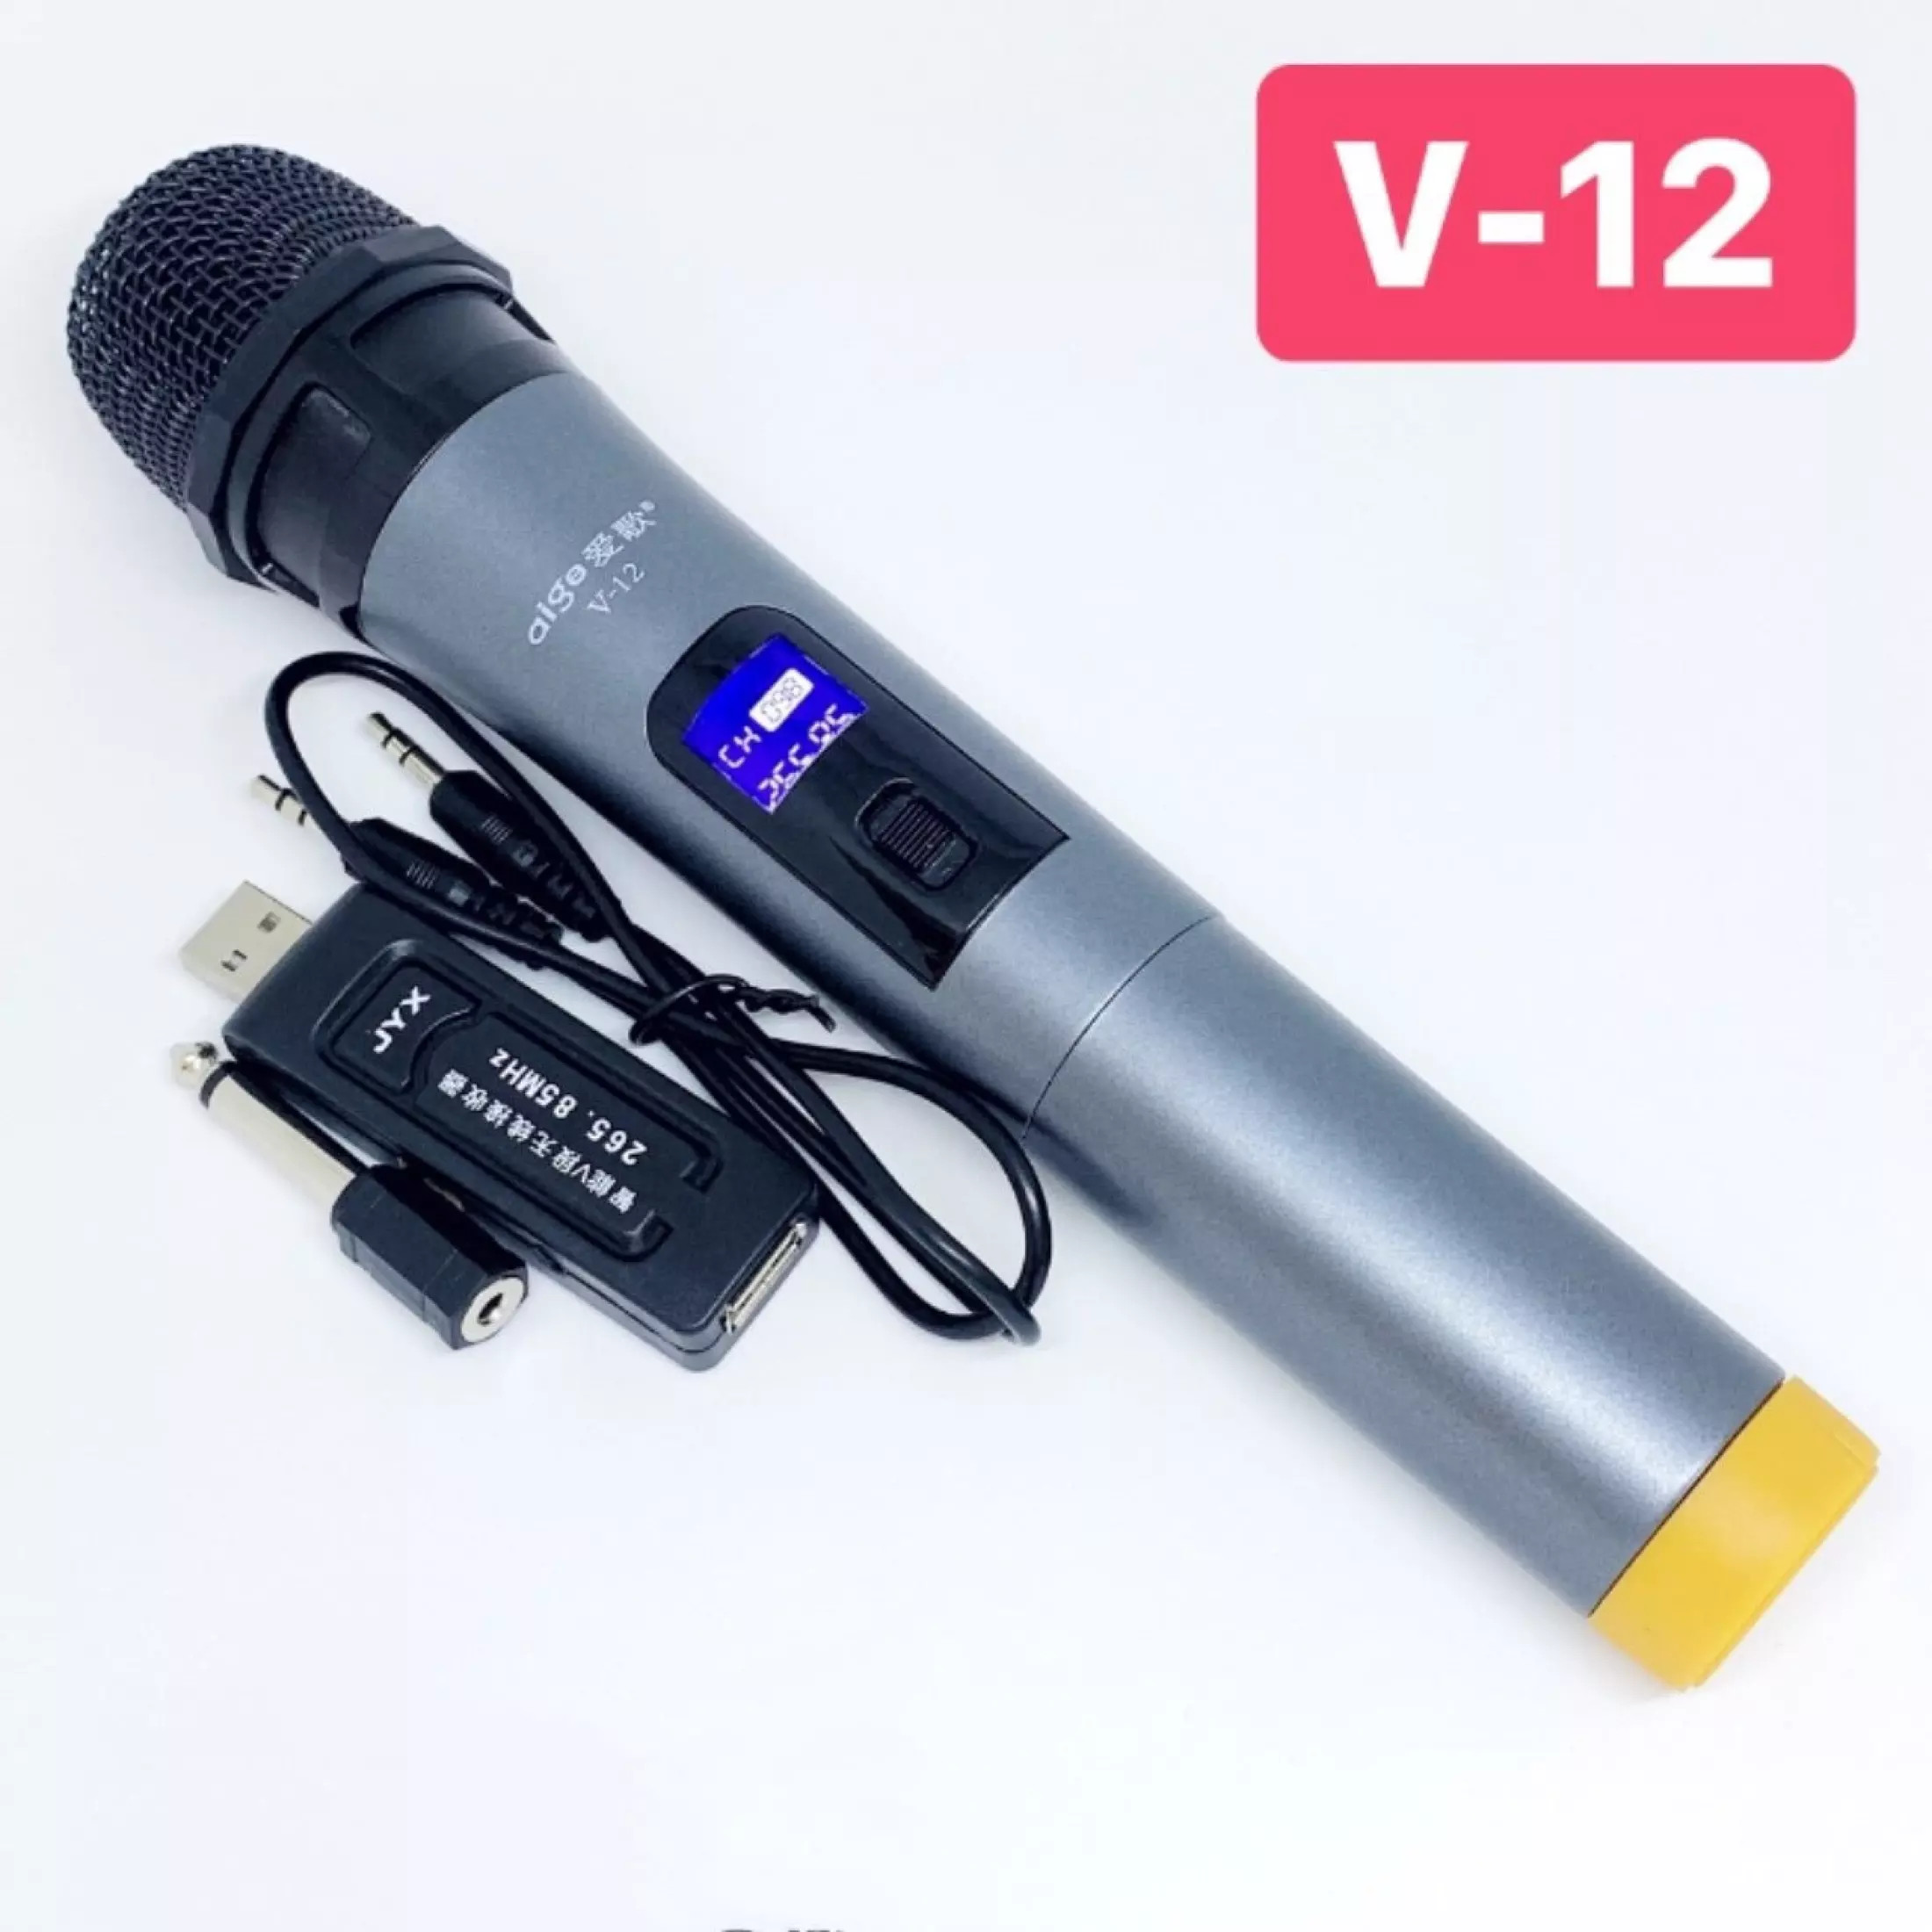 Micro Karaoke V12 không dây cho loa kéo loa karaoke loa bluetooth Zangsong V12 màn